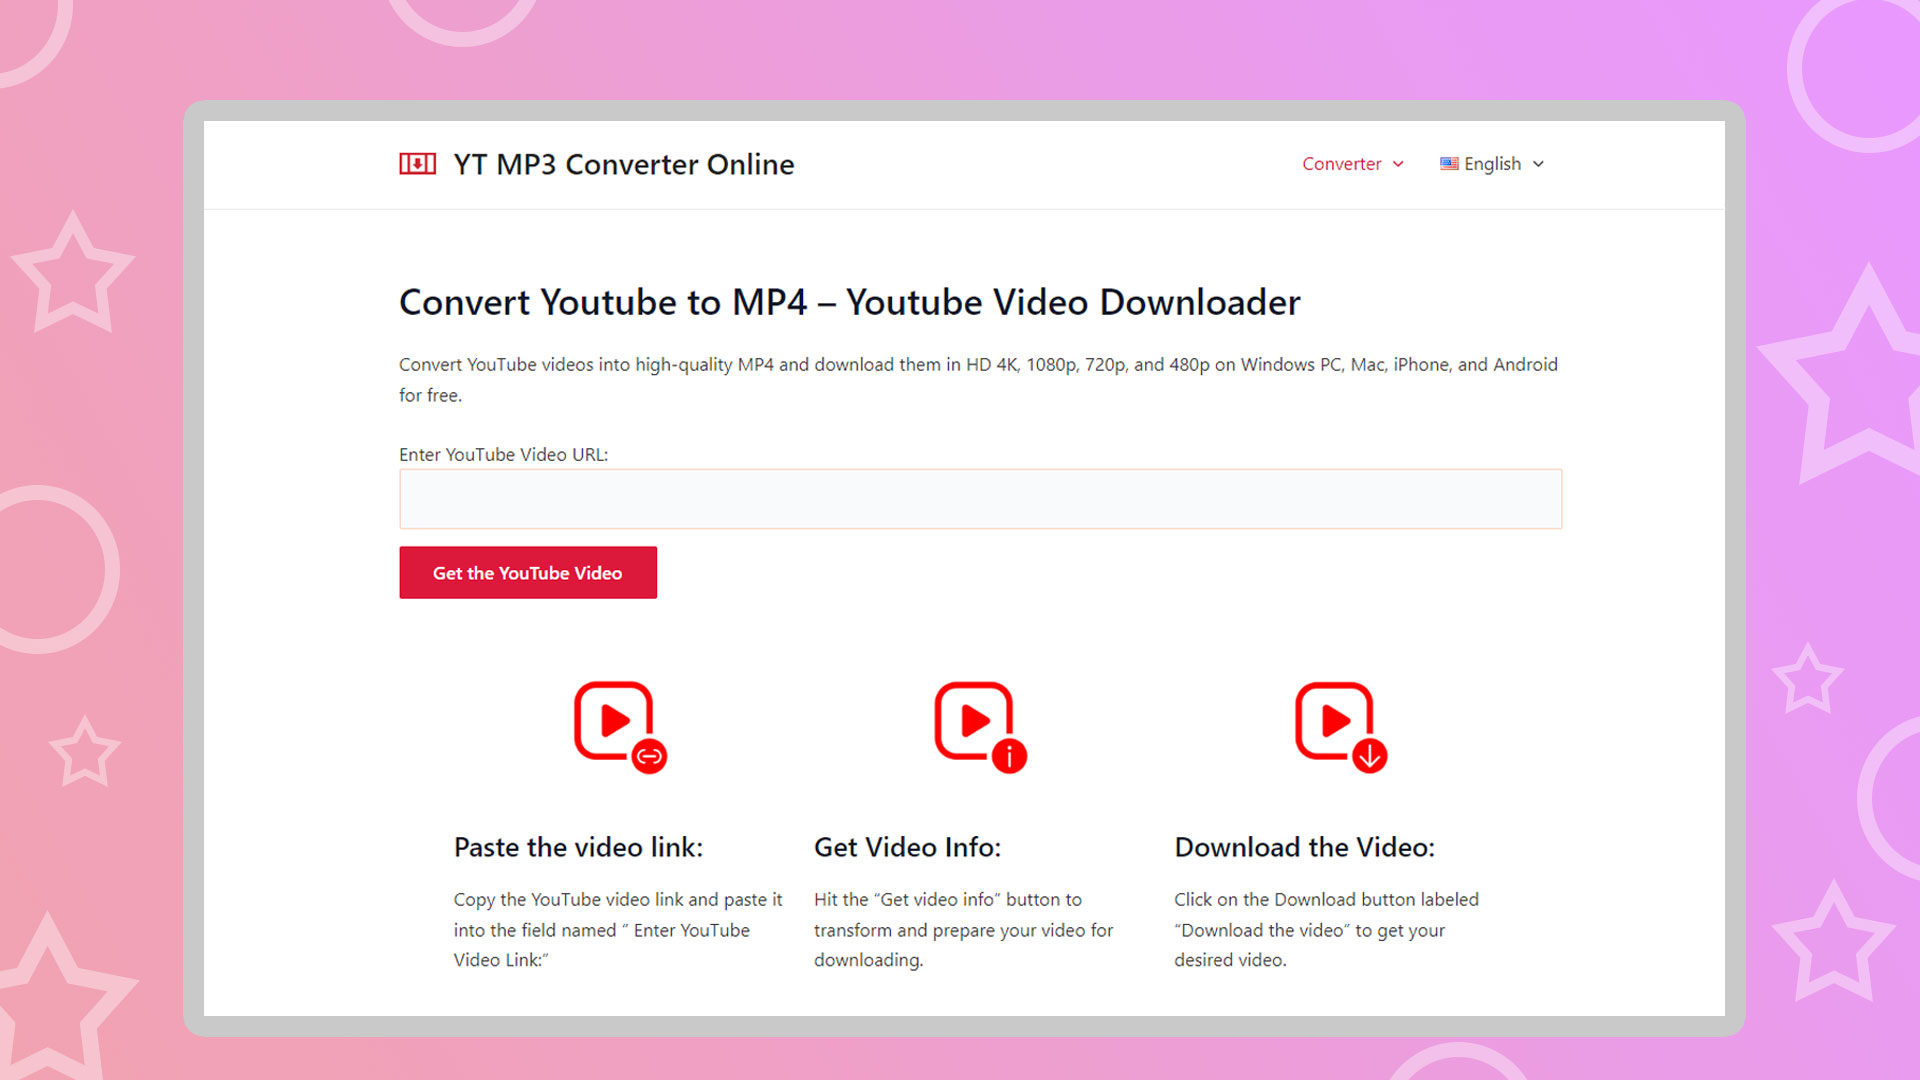 YT MP3 Converter Online Yt to MP4 Converter Online